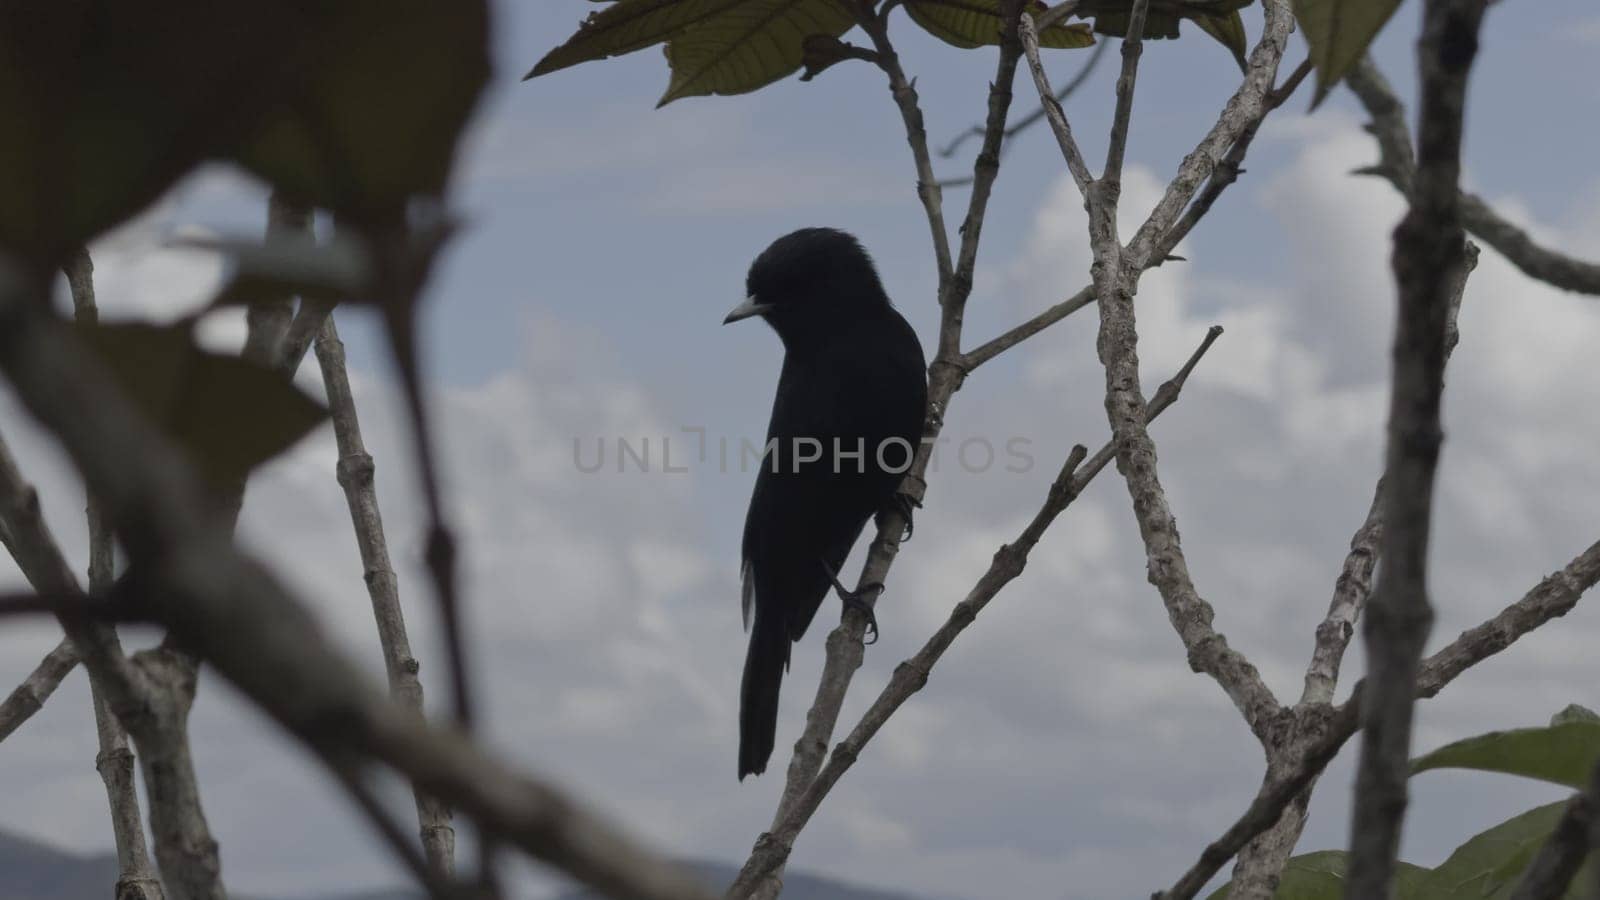 Startled Black Bird Suddenly Leaves its Perch on Tree Branch by FerradalFCG